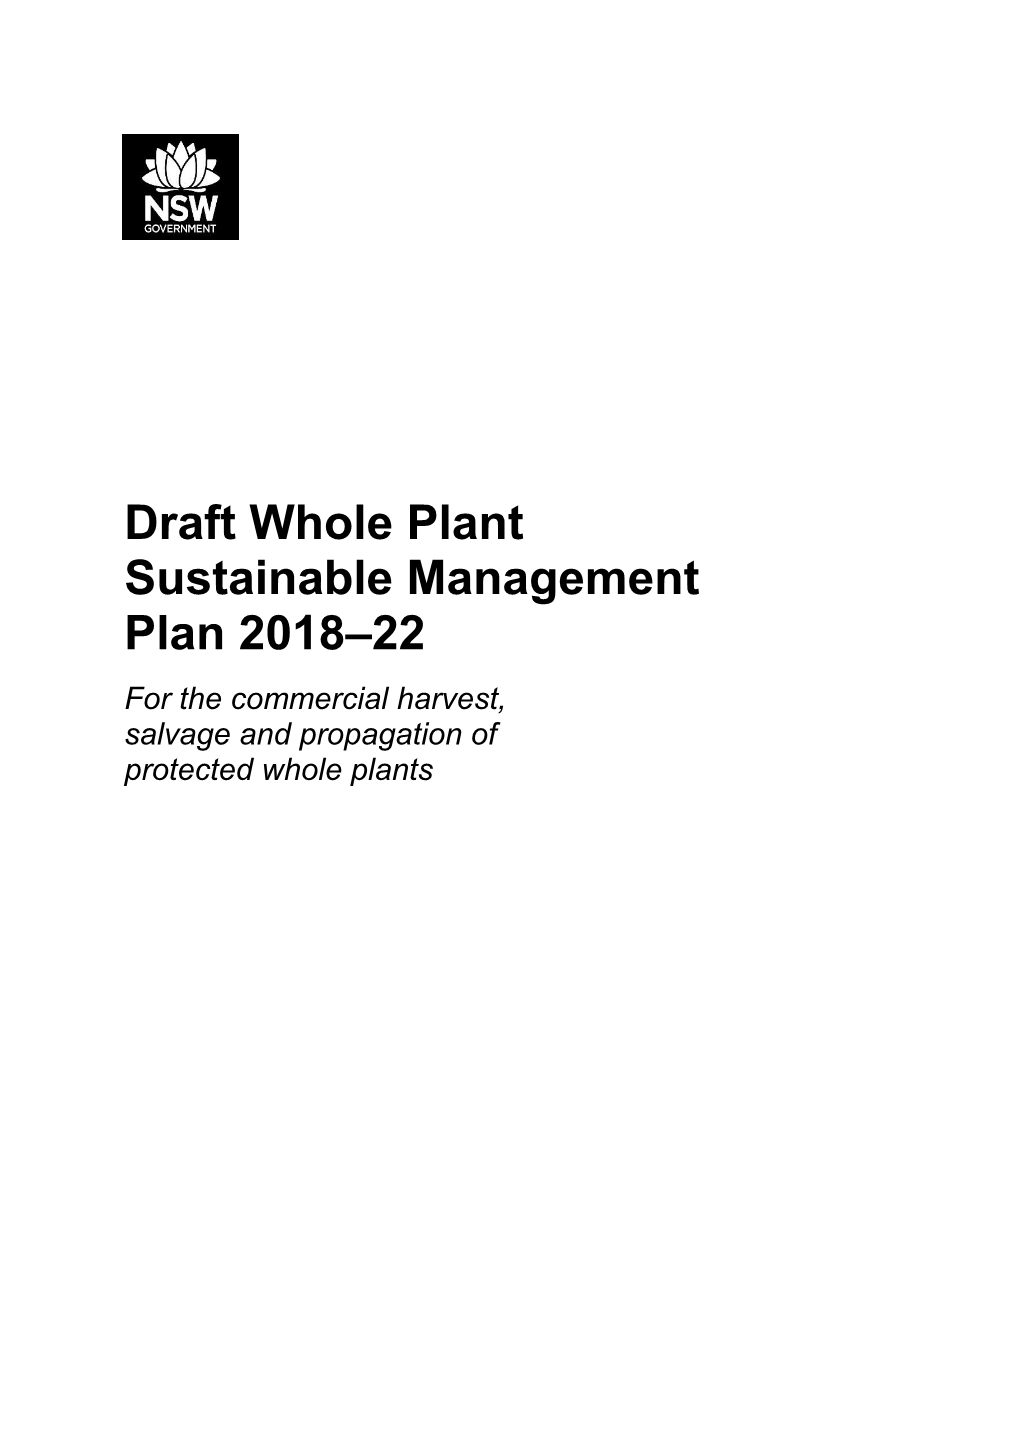 Draft Whole Plant Sustainable Management Plan 2018 22